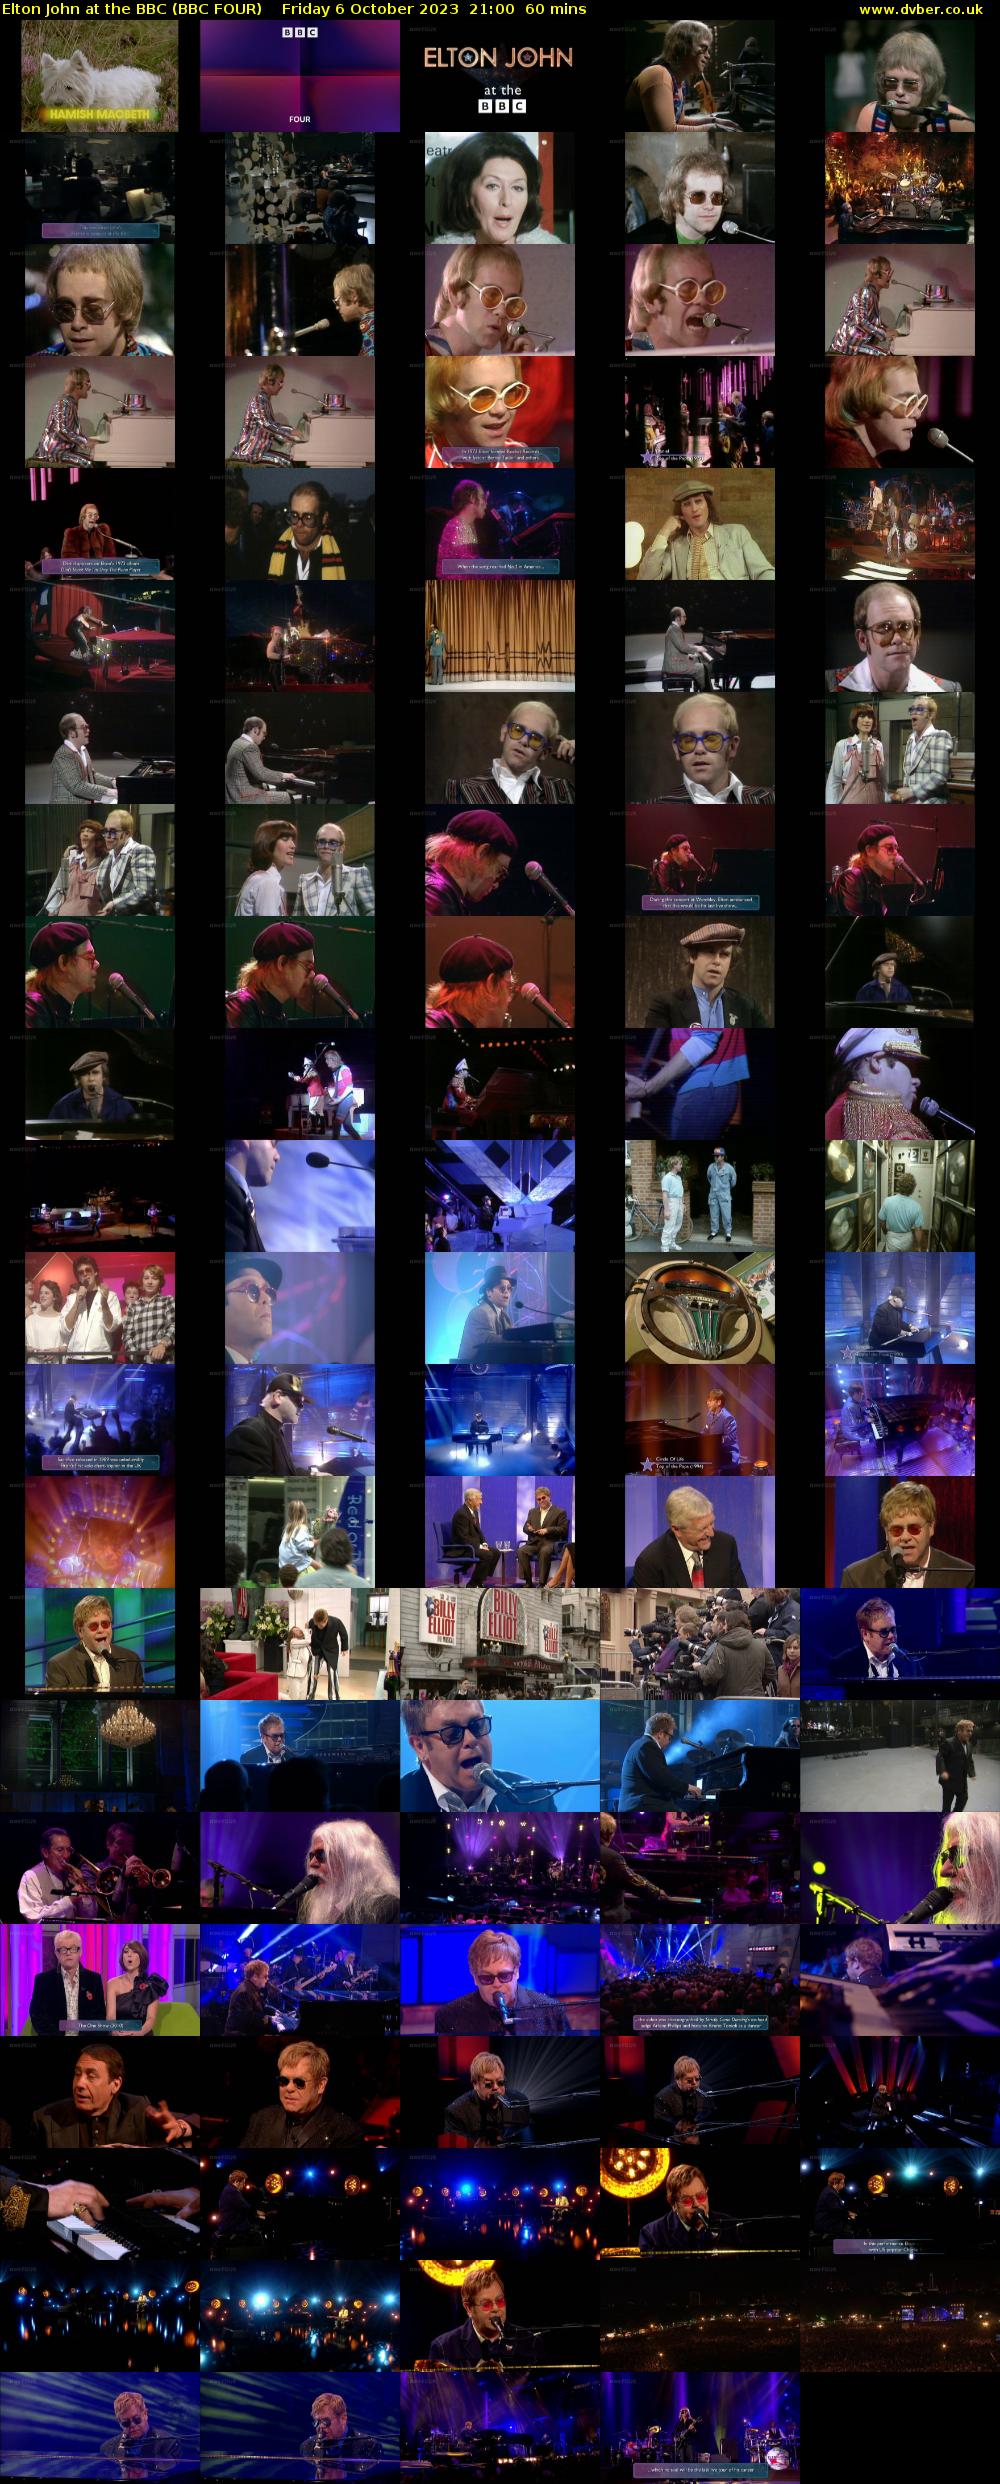 Elton John at the BBC (BBC FOUR) Friday 6 October 2023 21:00 - 22:00